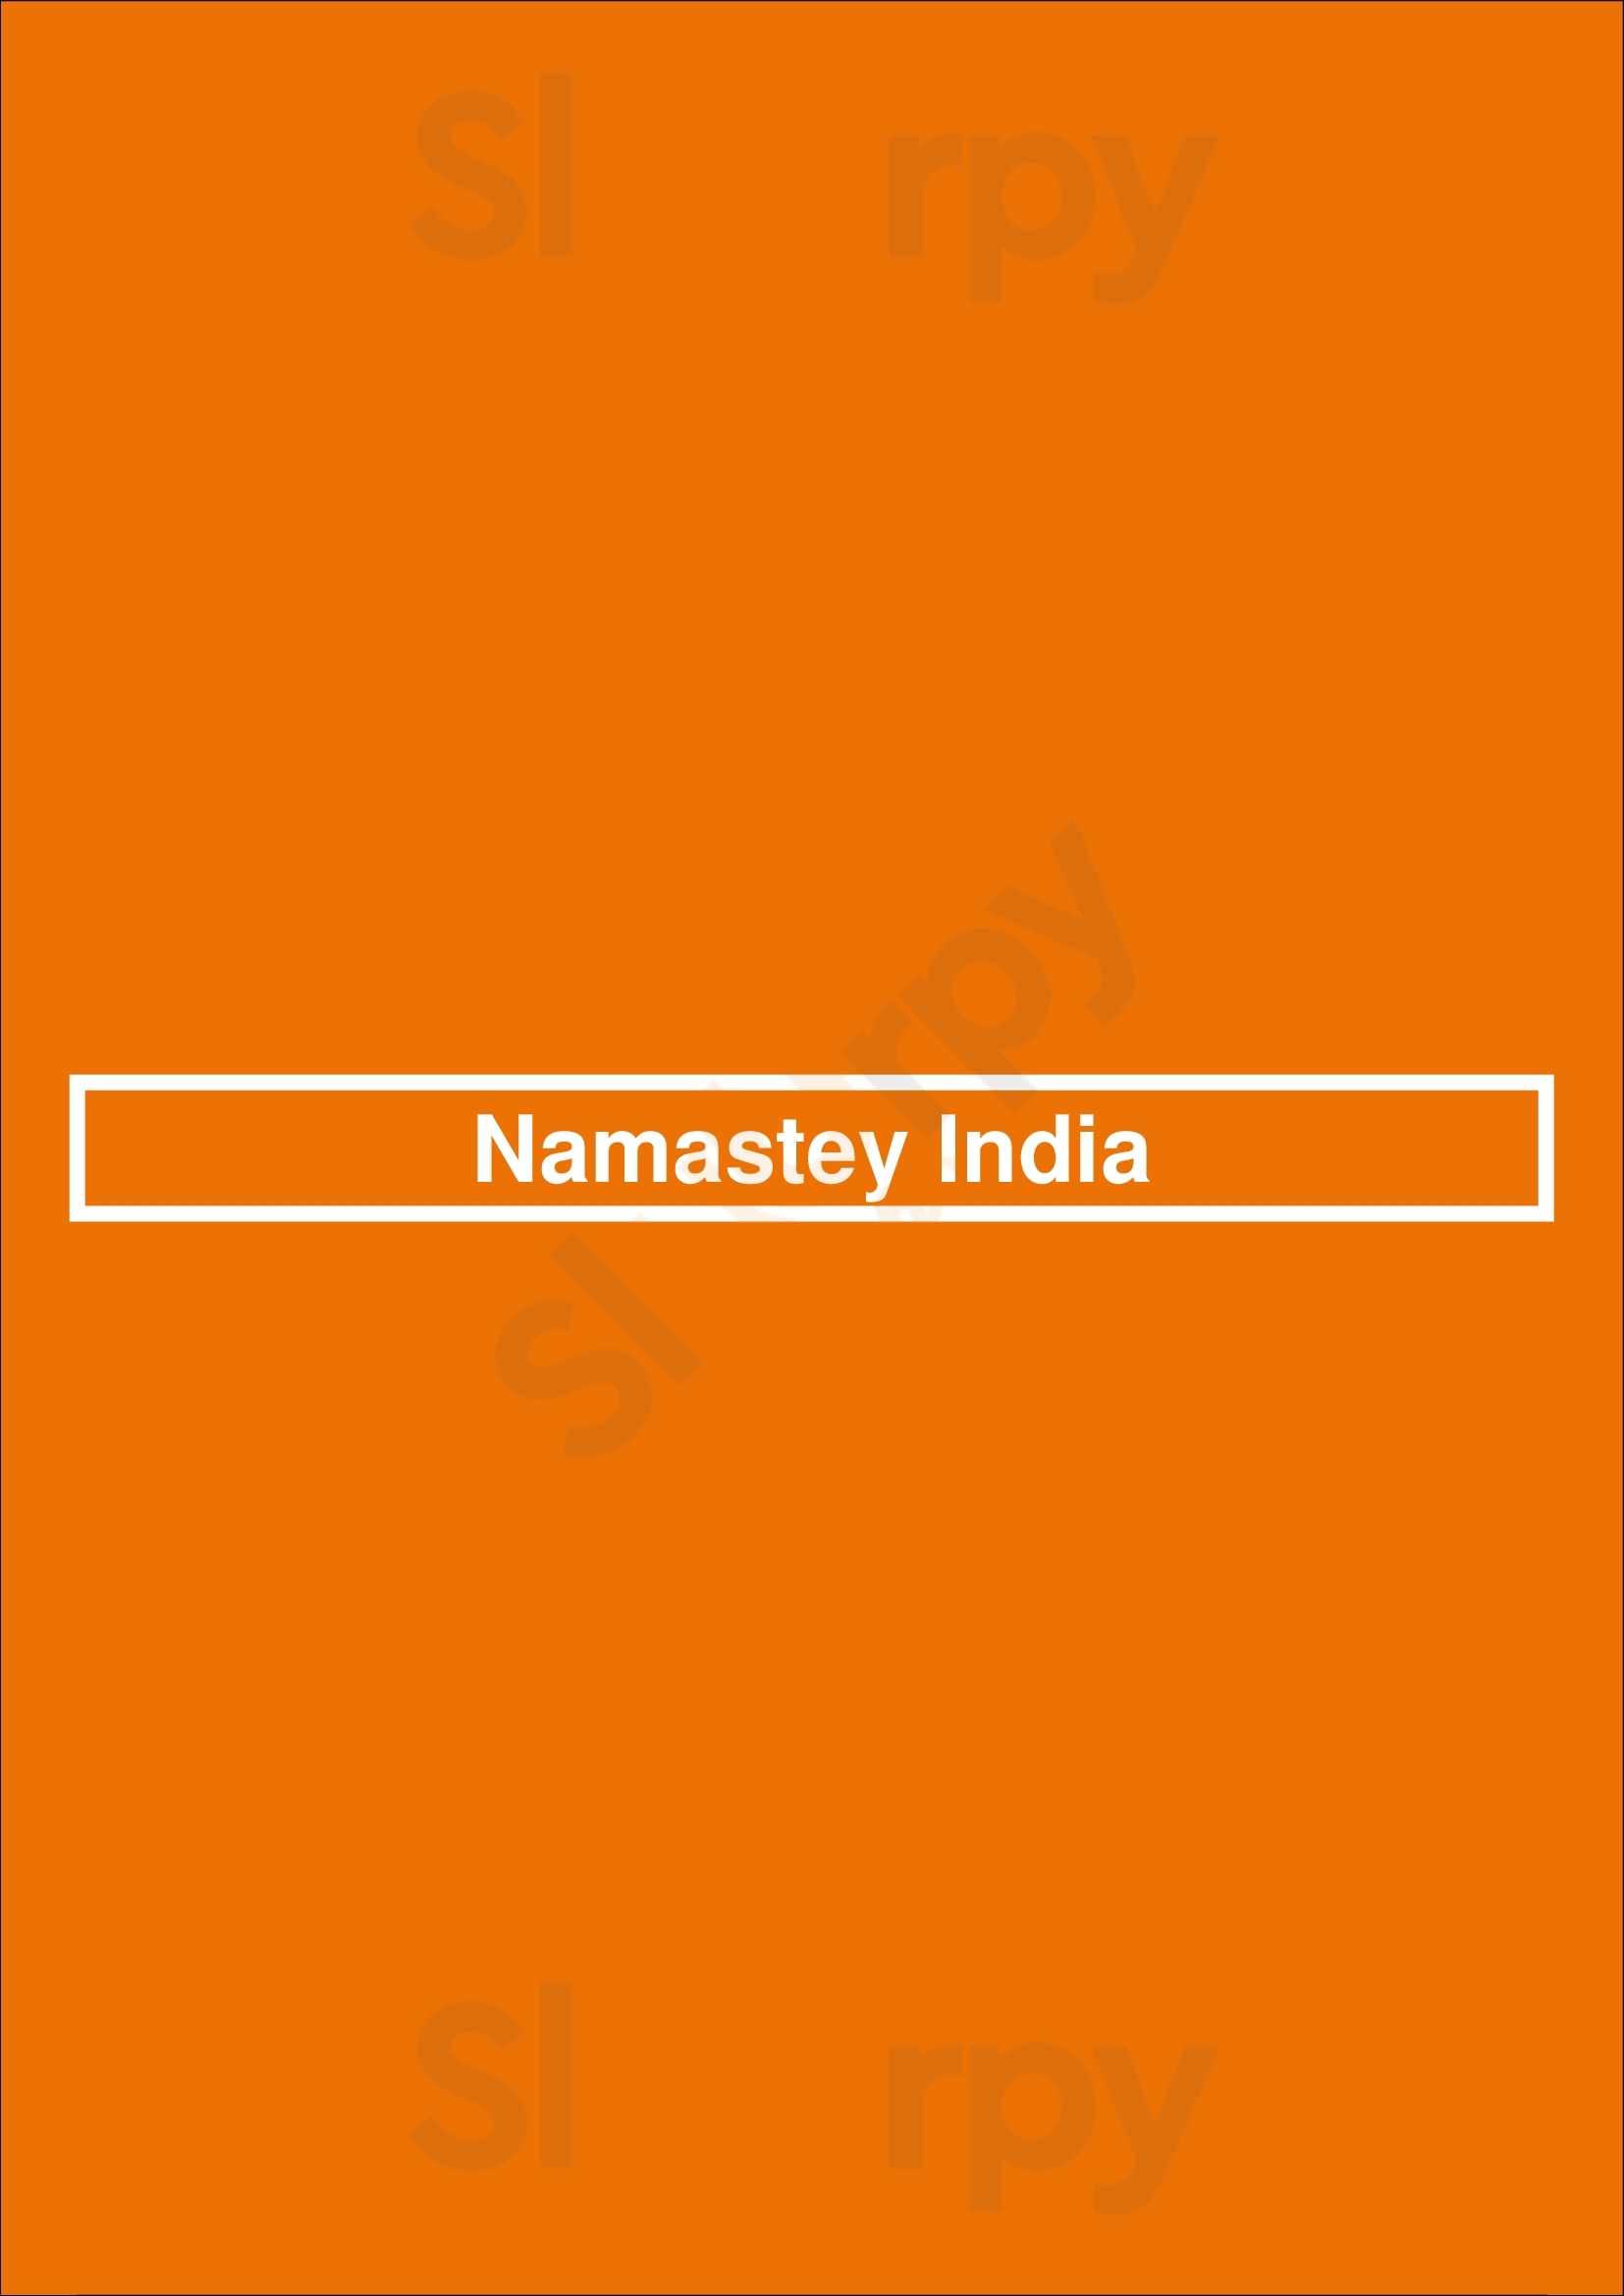 Namastey India Veenendaal Menu - 1